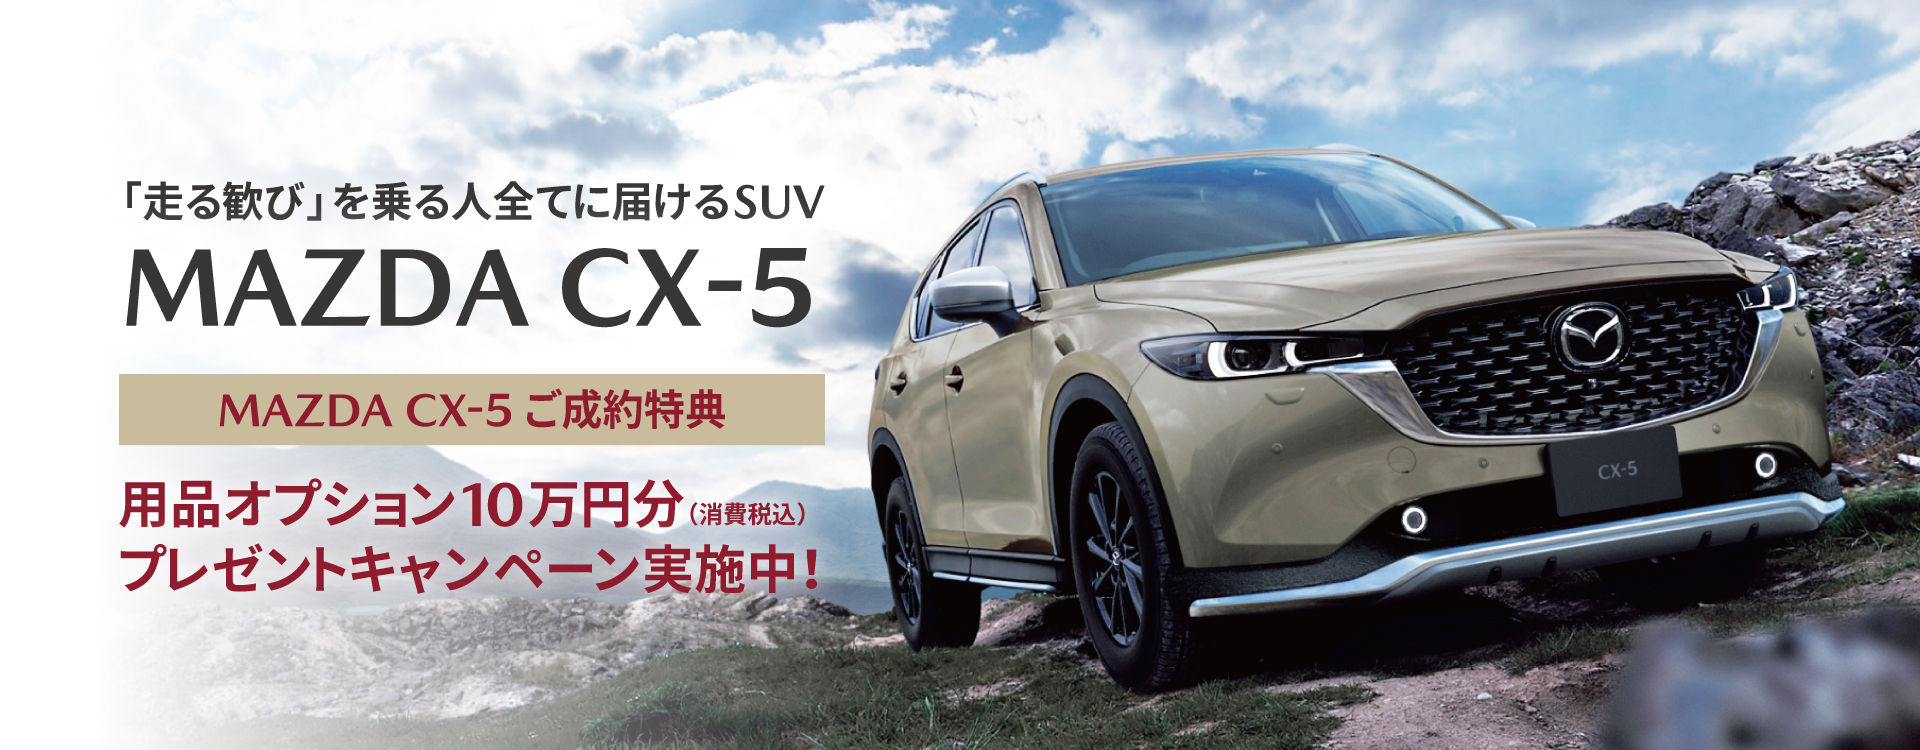 CX-5ご成約特典│用品オプション10万円分プレゼントキャンペーン